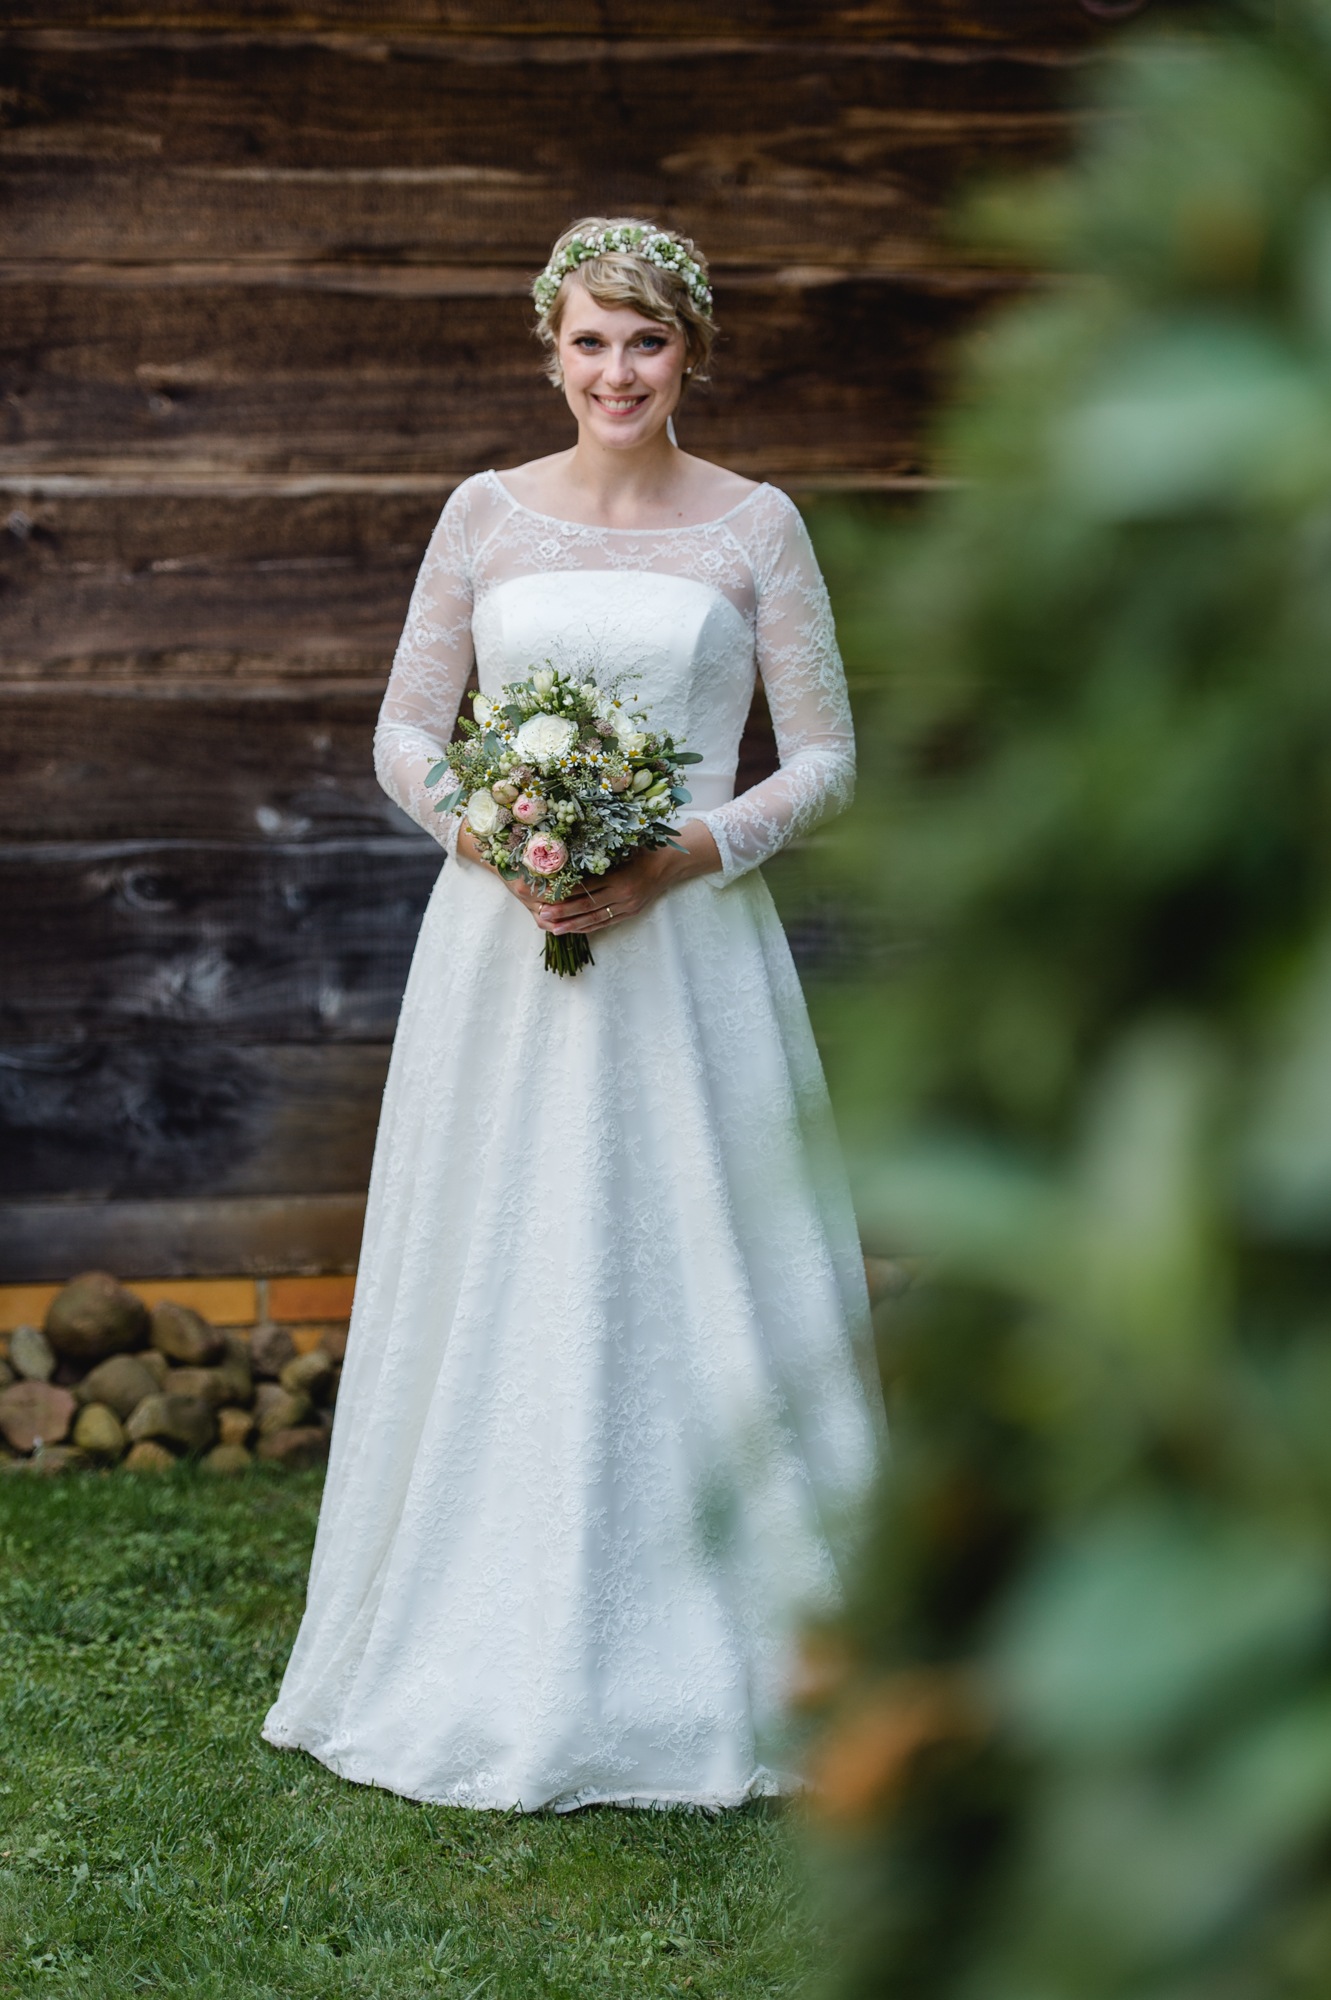 Heiraten-im-Spreewald-Hochzeitsfotograf-Spreewald